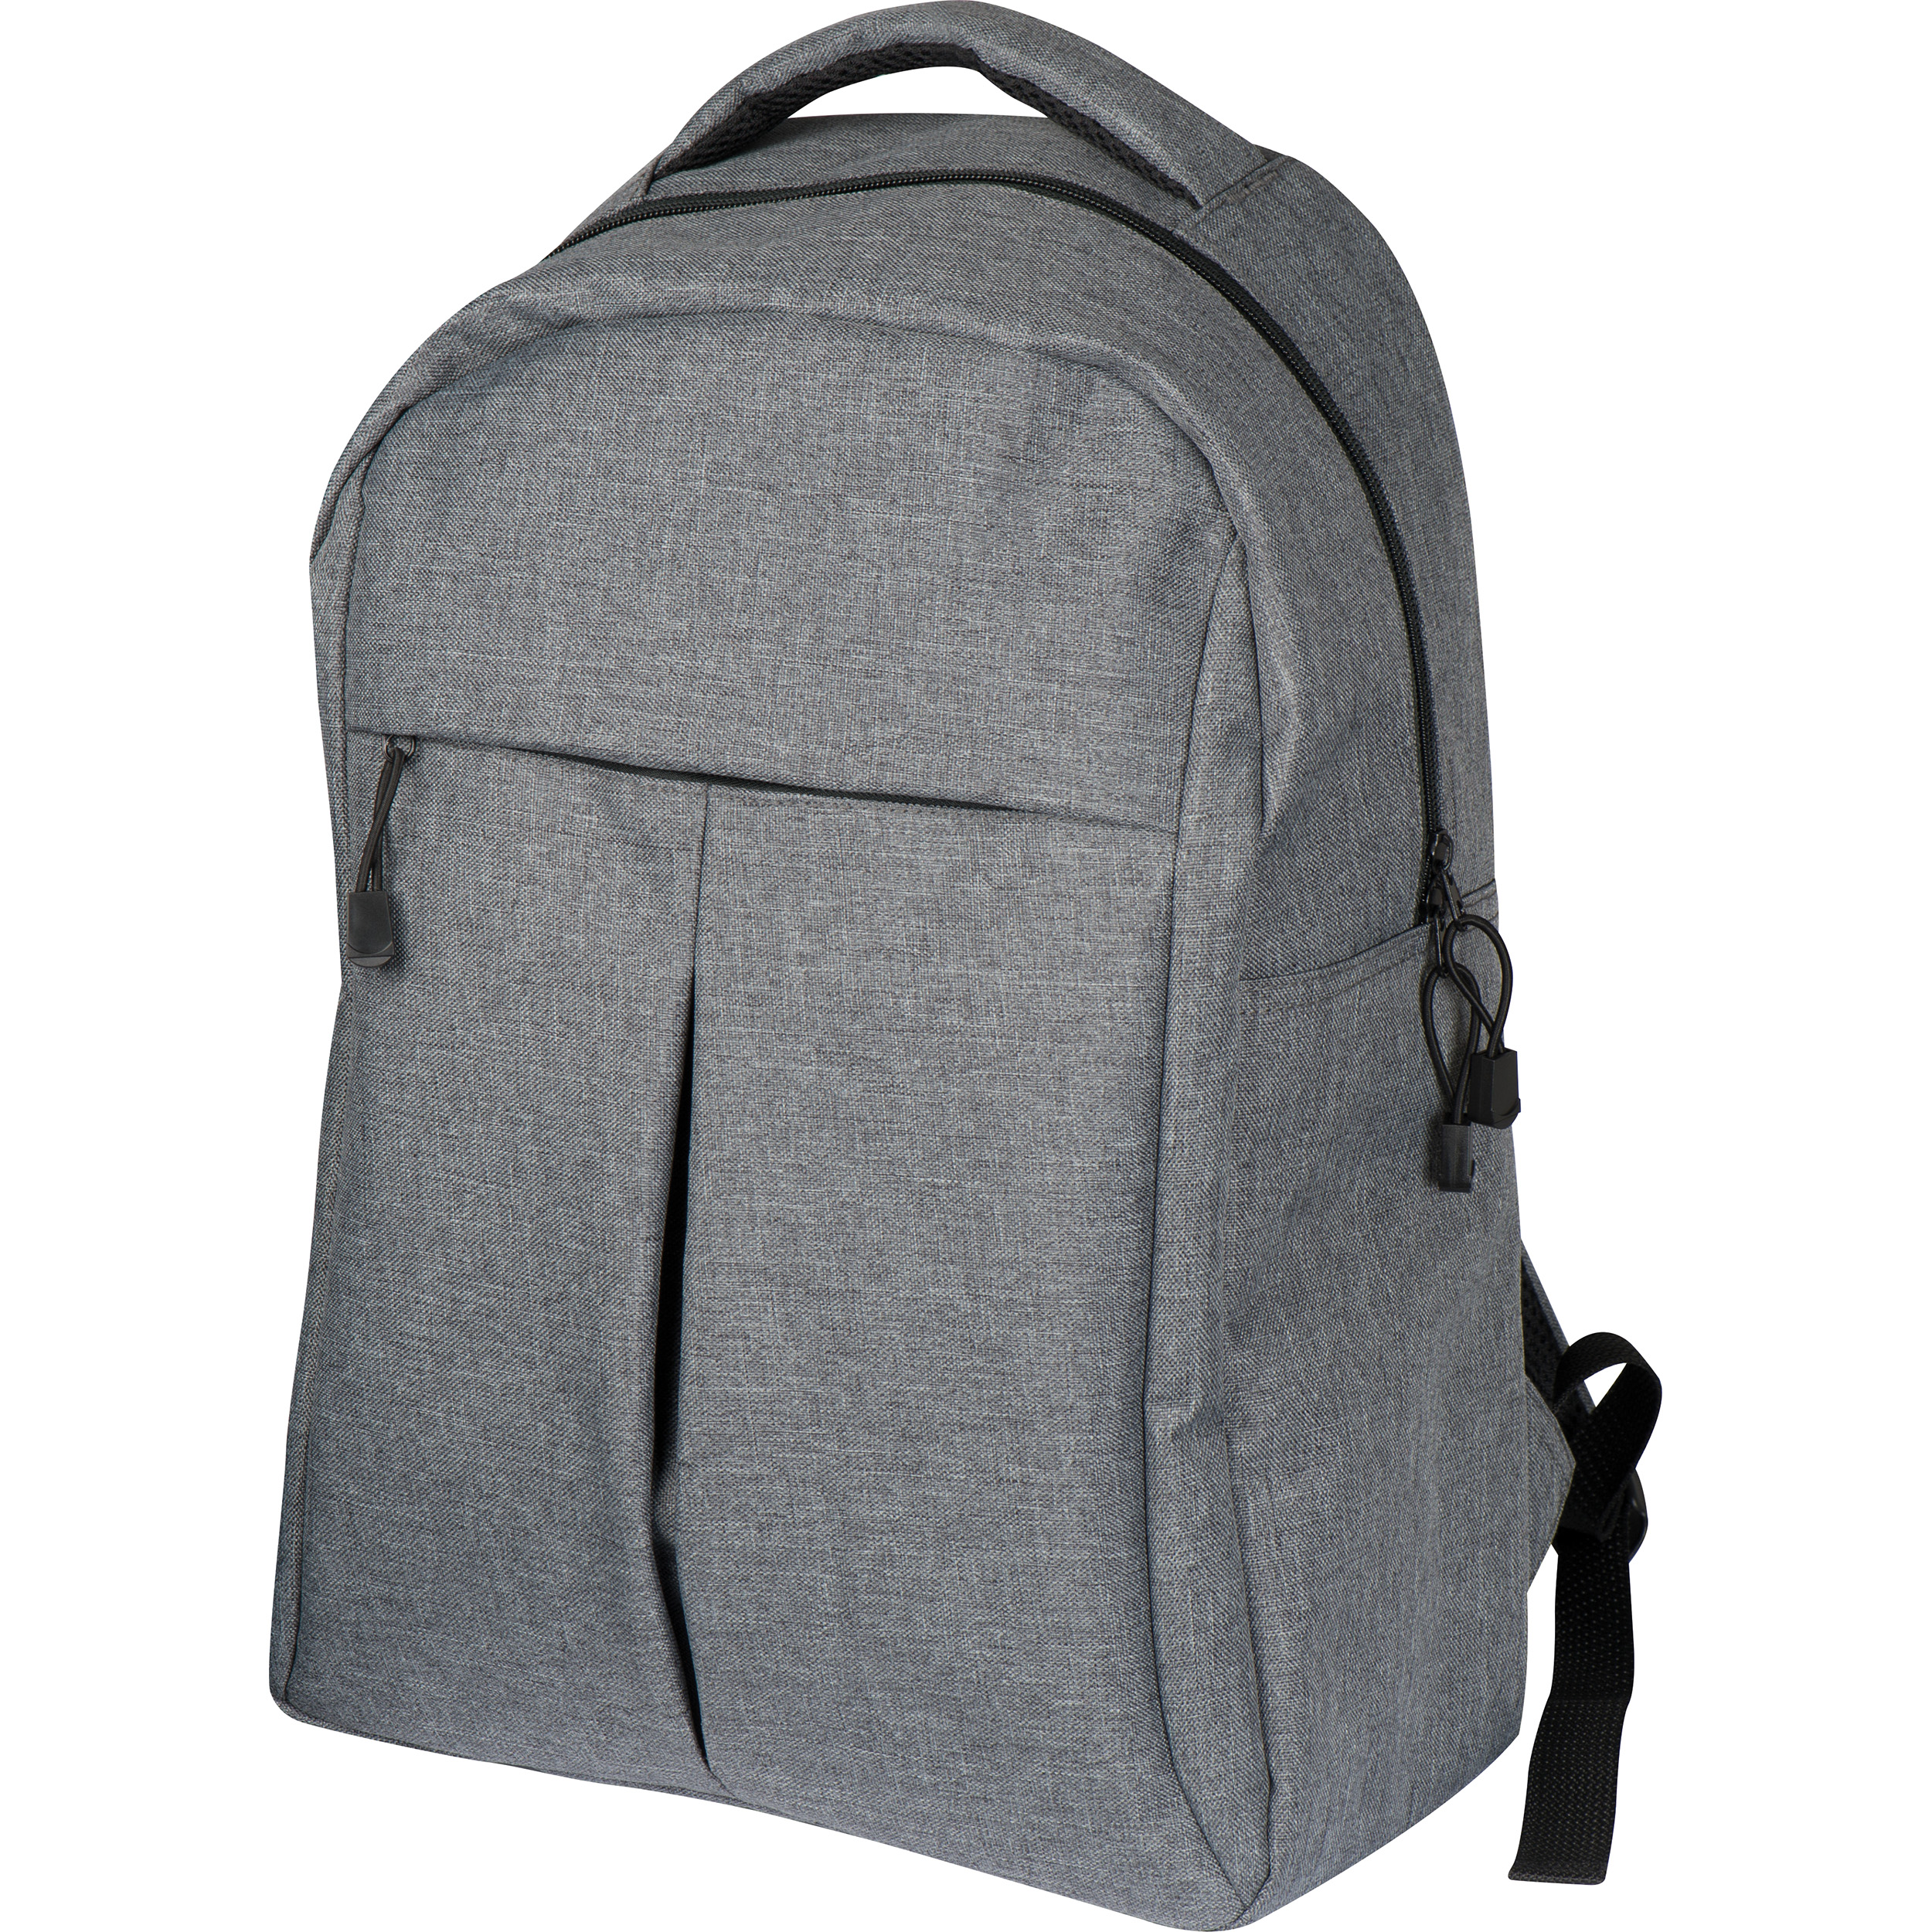 Grey backpack